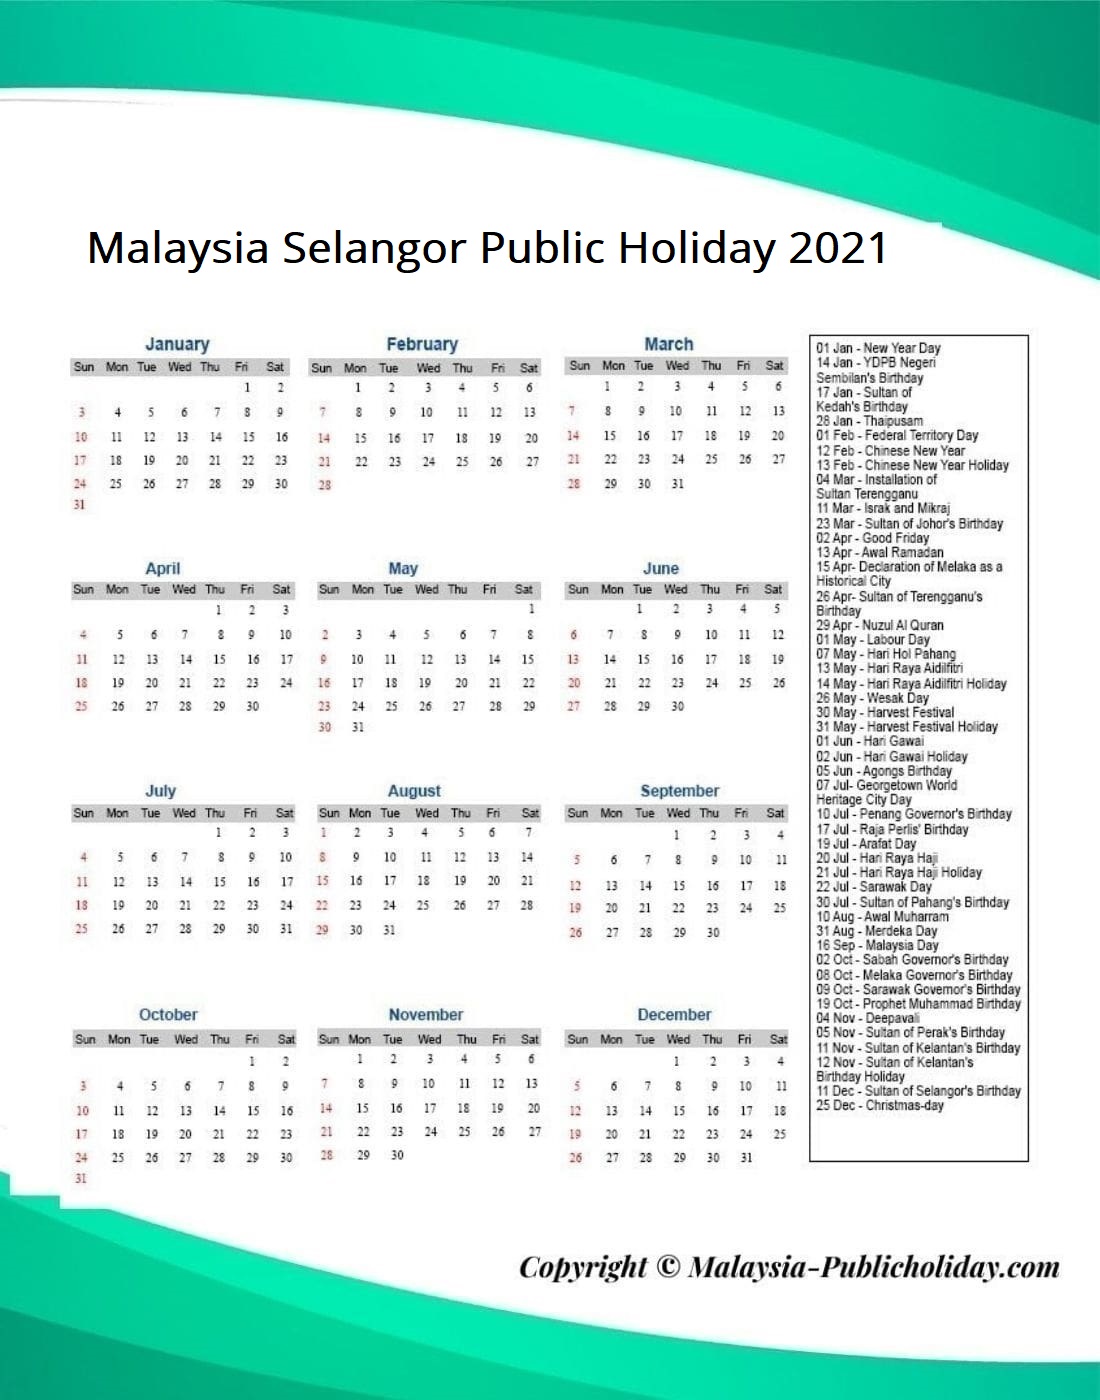 Holiday selangor 2022 public 2022 Malaysia